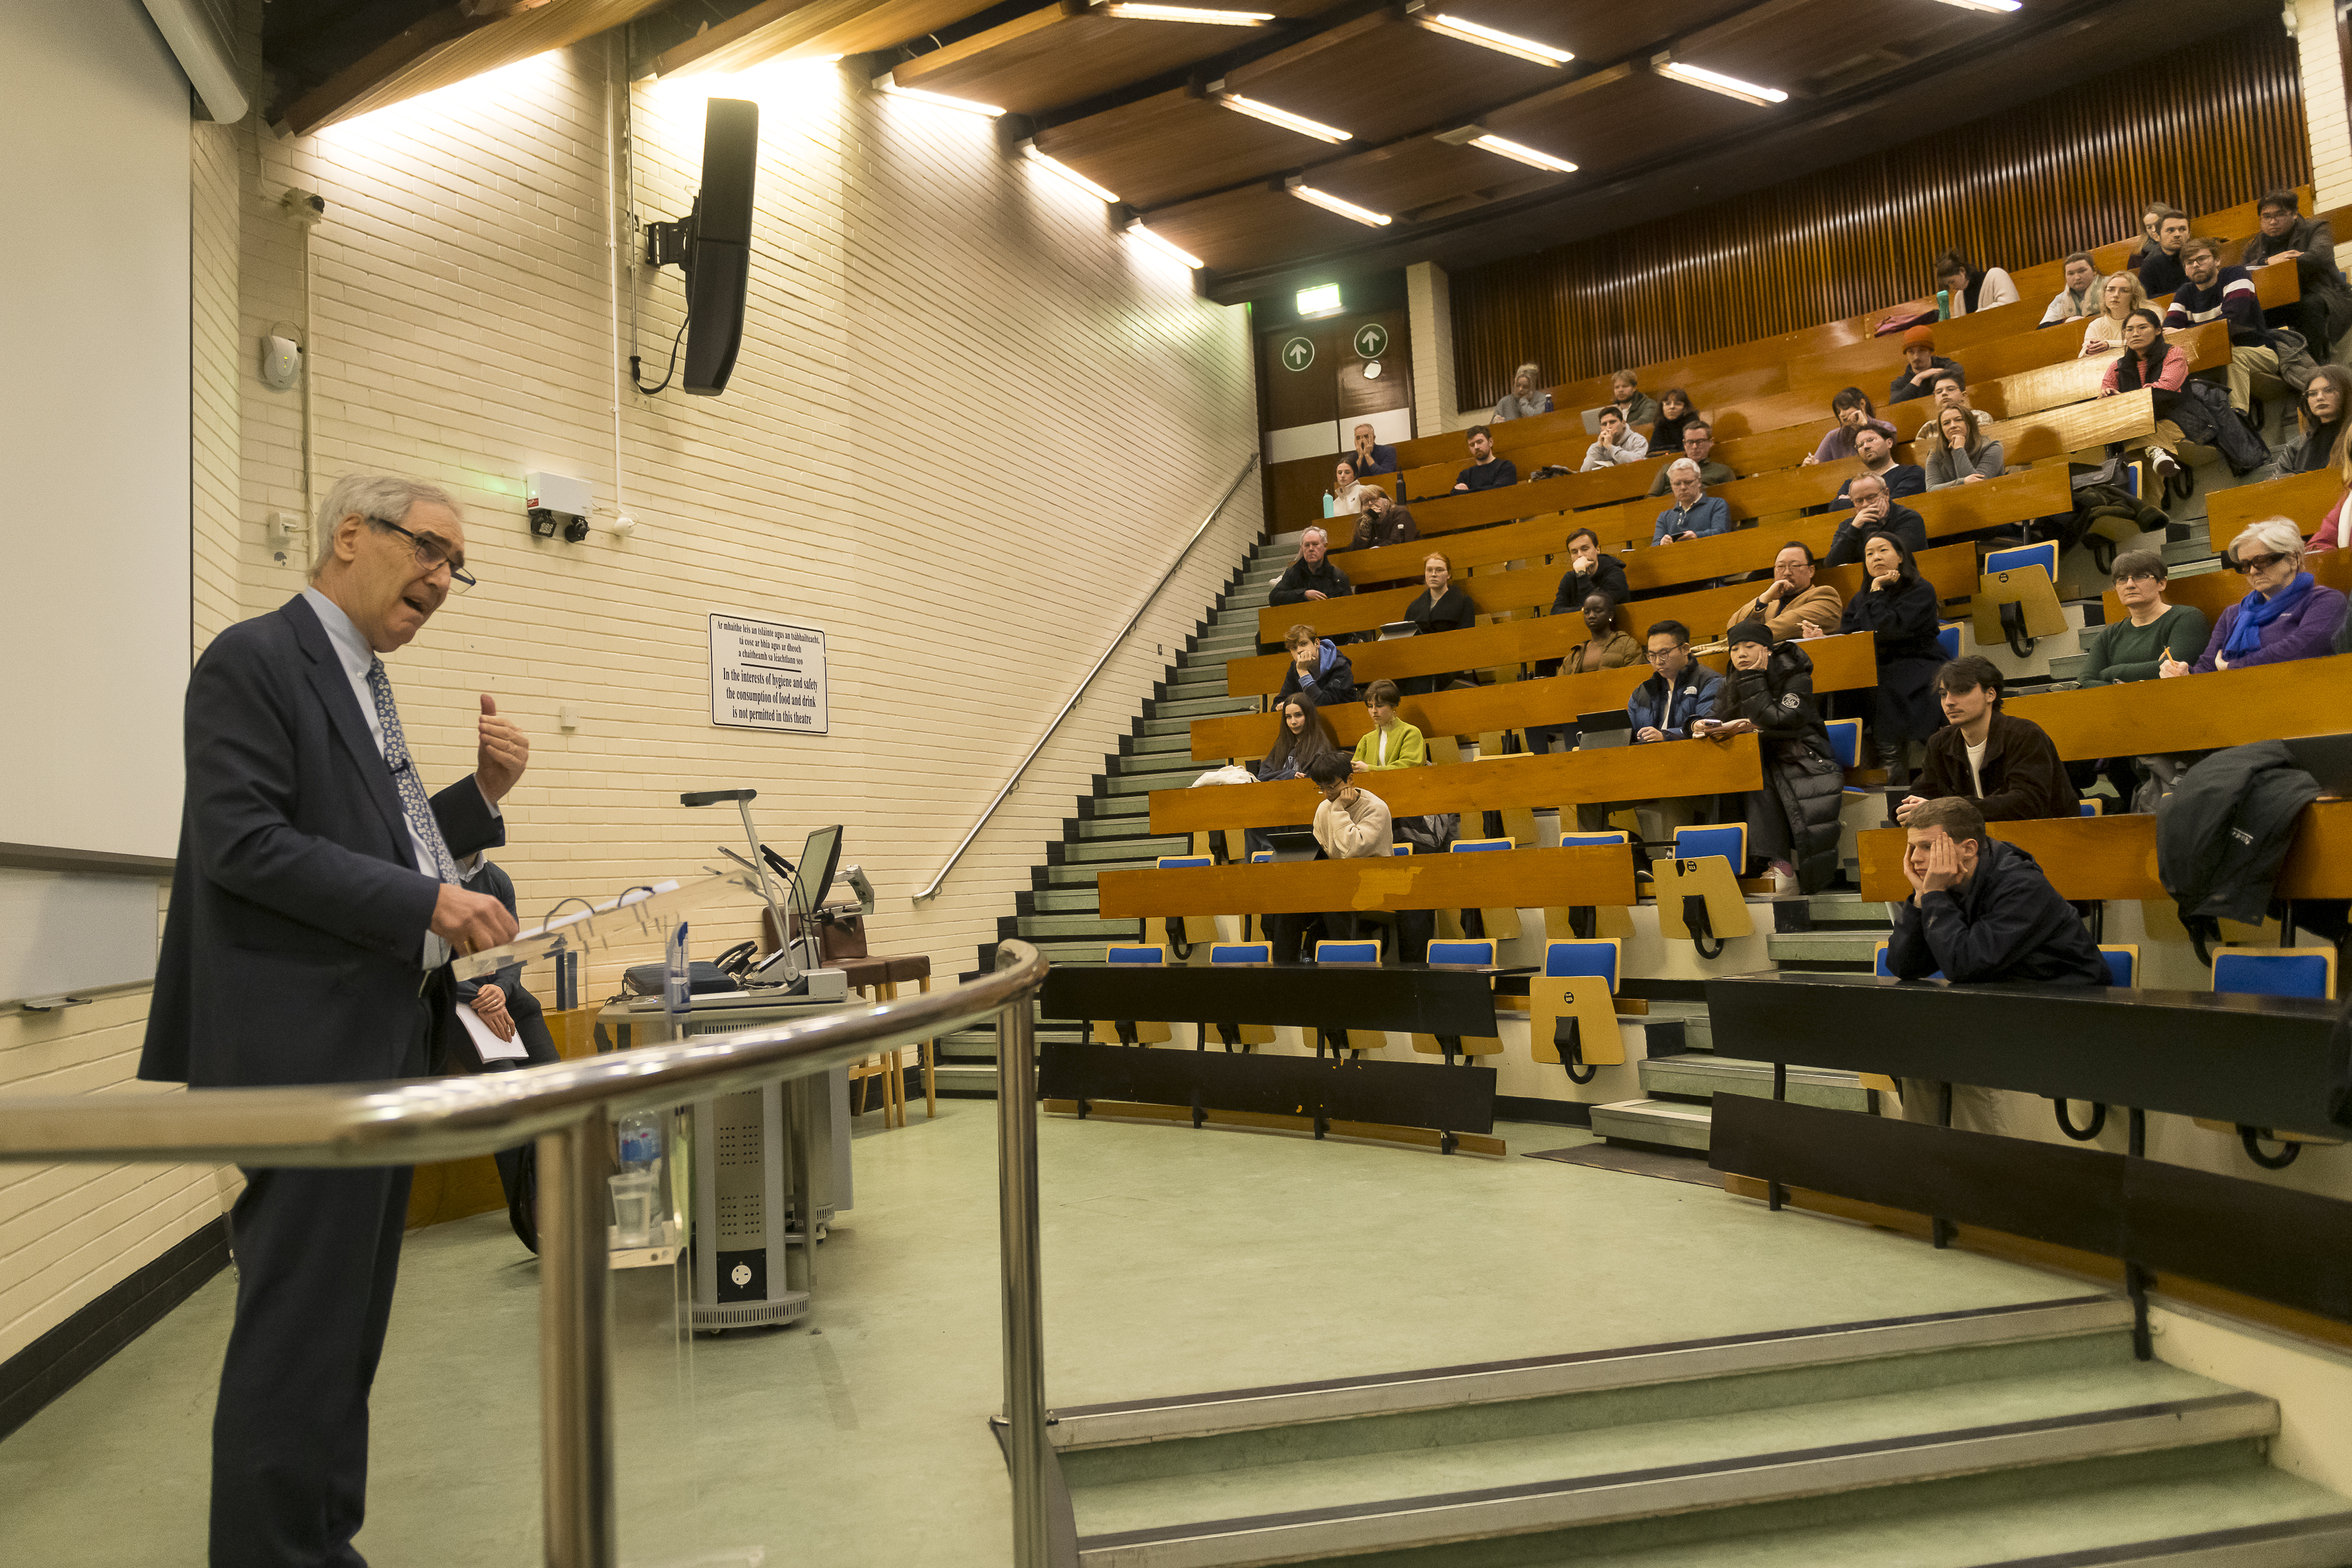 Michael Ignatieff public lecture at UCD